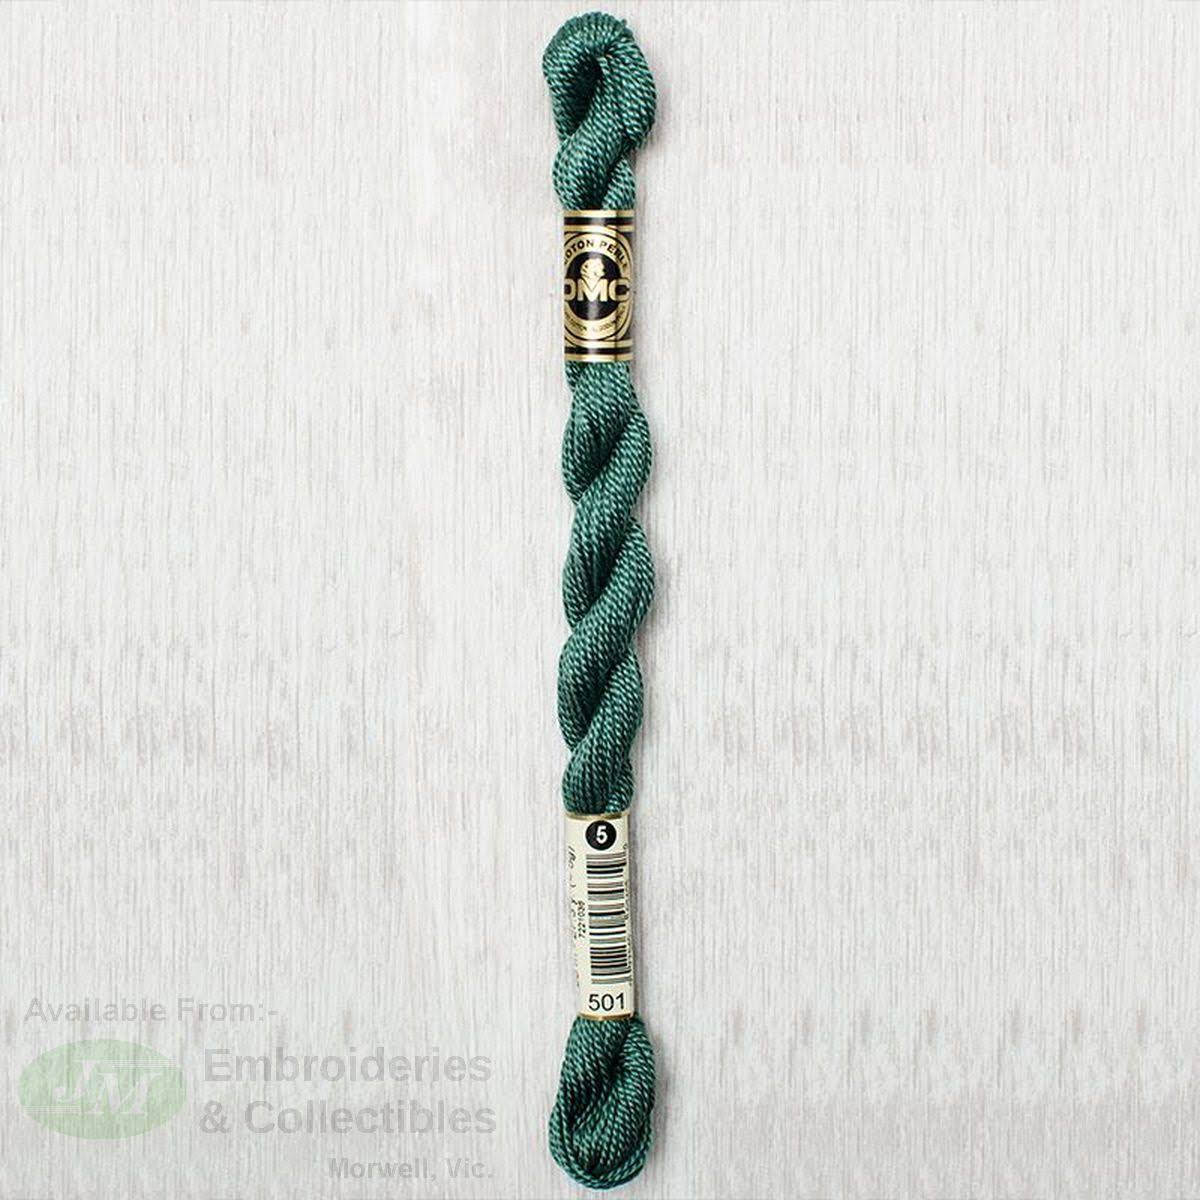 DMC 115 5501 Pearl Cotton Thread - Dark Blue Green, Size 5